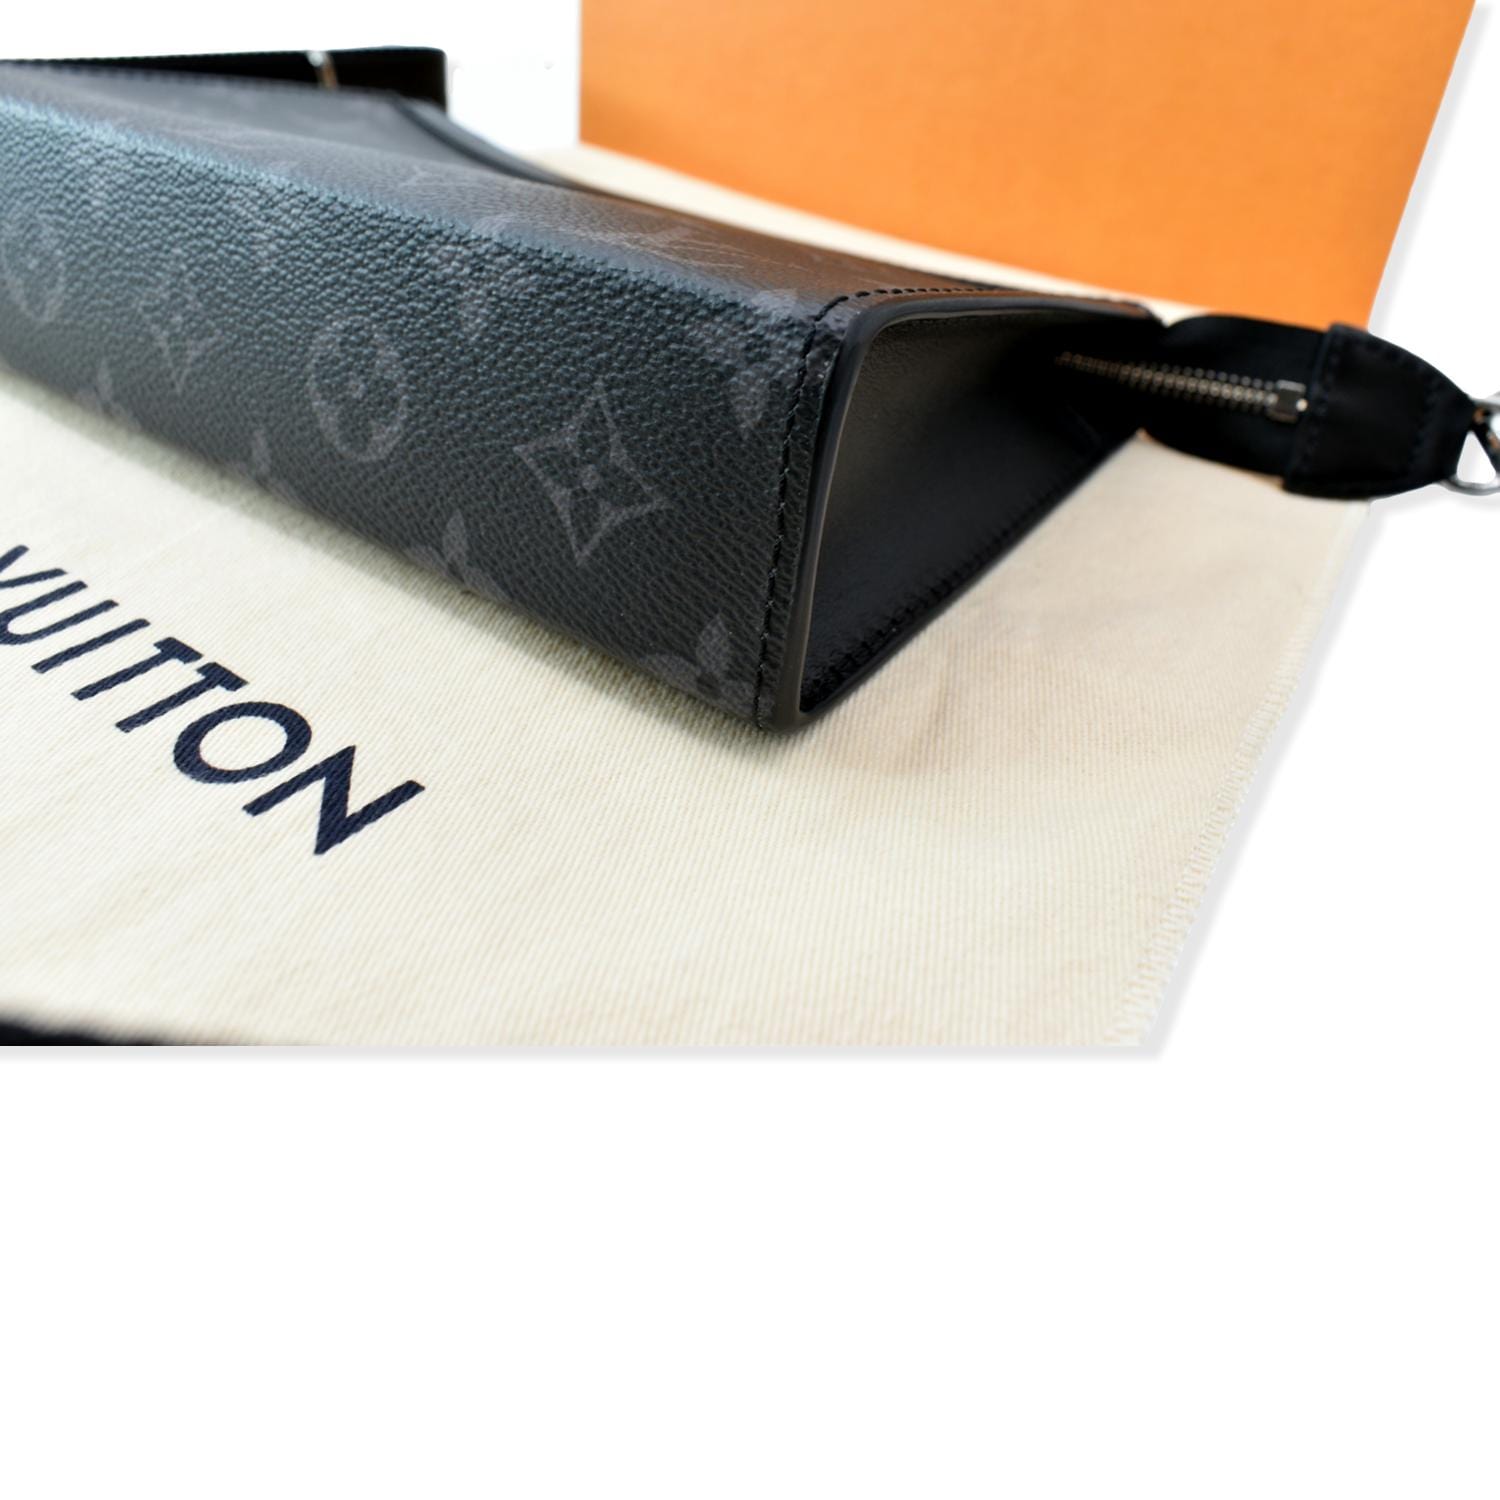 Louis Vuitton Monogram Gaston Wearable Wallet, Black